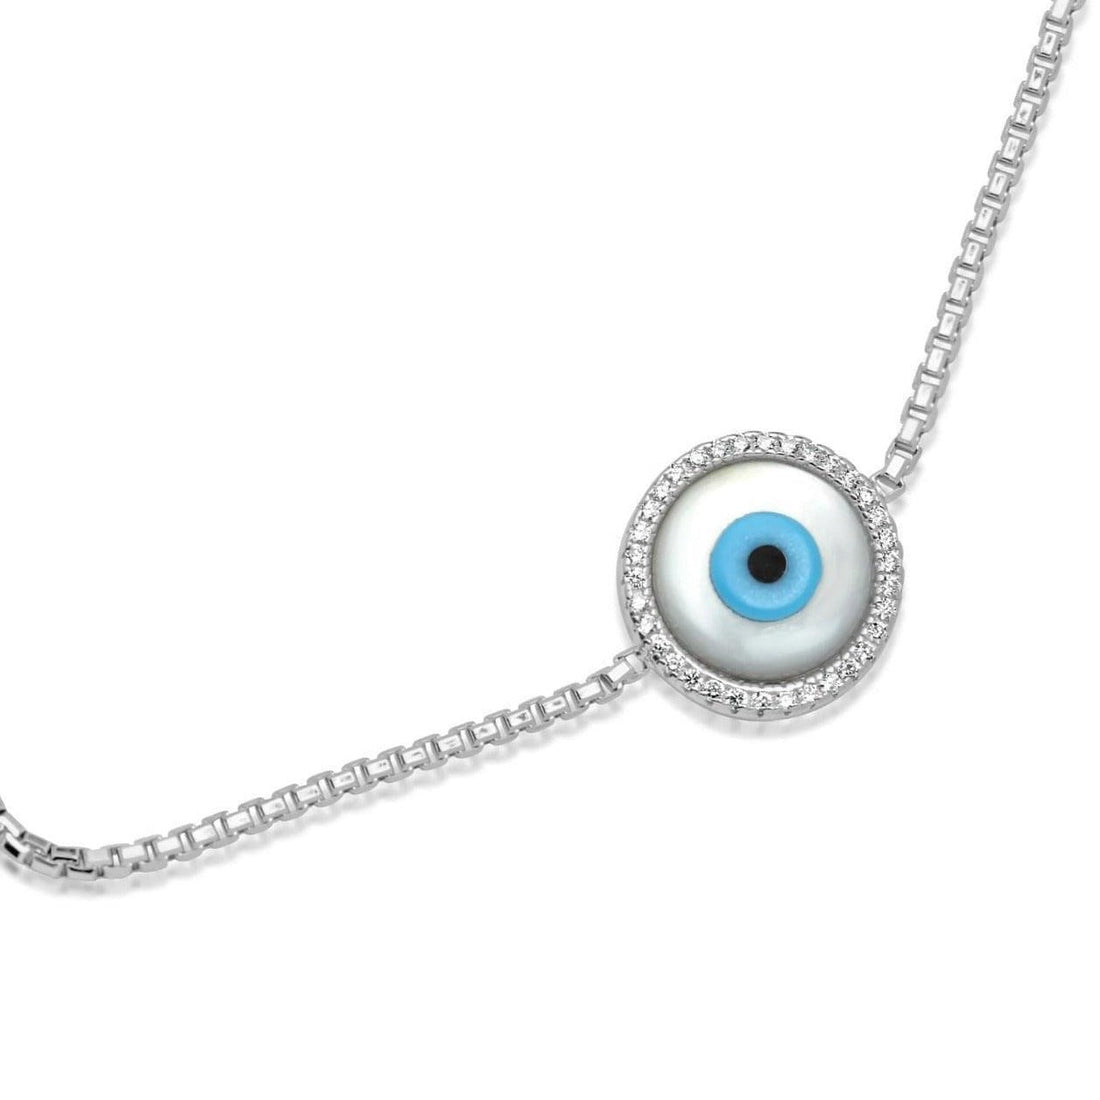 Buy Silver Round Evil Eye Bracelet at Silver Box Original online store. - Silverboxoriginal